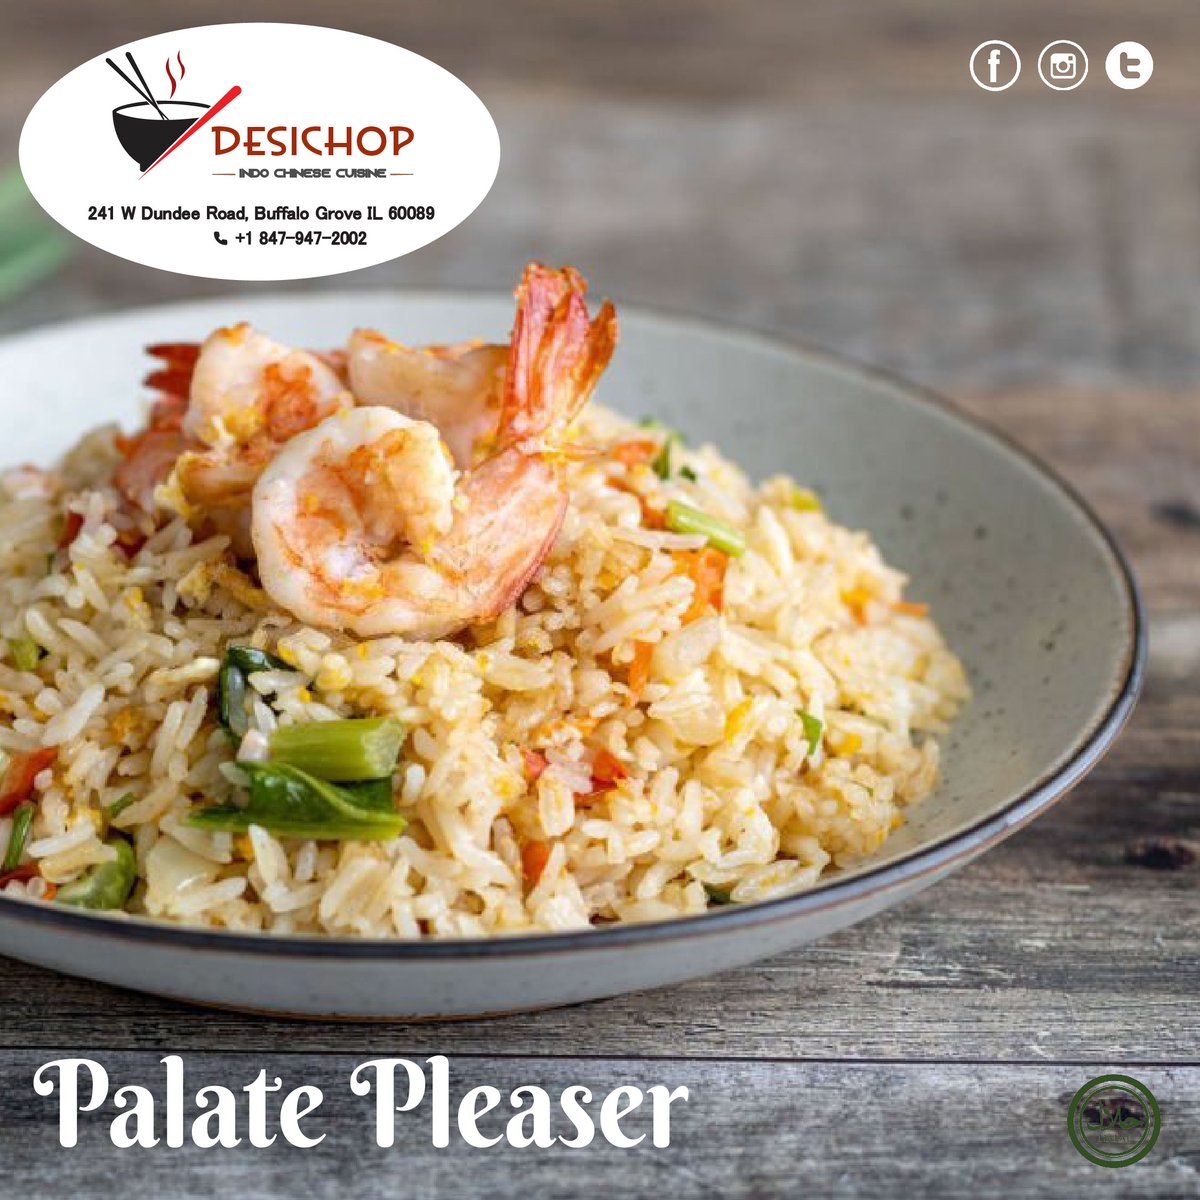 'Rice-licious Delight'
#ShrimpFriedRice
#AsianCuisine
#FoodieFaves
#SeafoodLovers
#FlavorfulEats
#RiceDish
#YummyInMyTummy
#FoodGasm
#TasteOfAsia
#FoodCravings